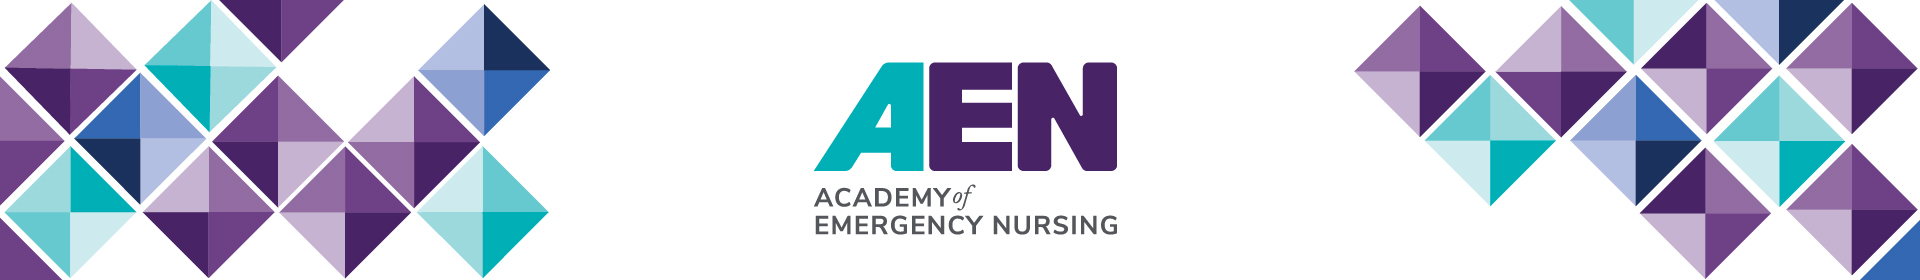 2020 Academy of Emergency Nursing Board Application Event Banner